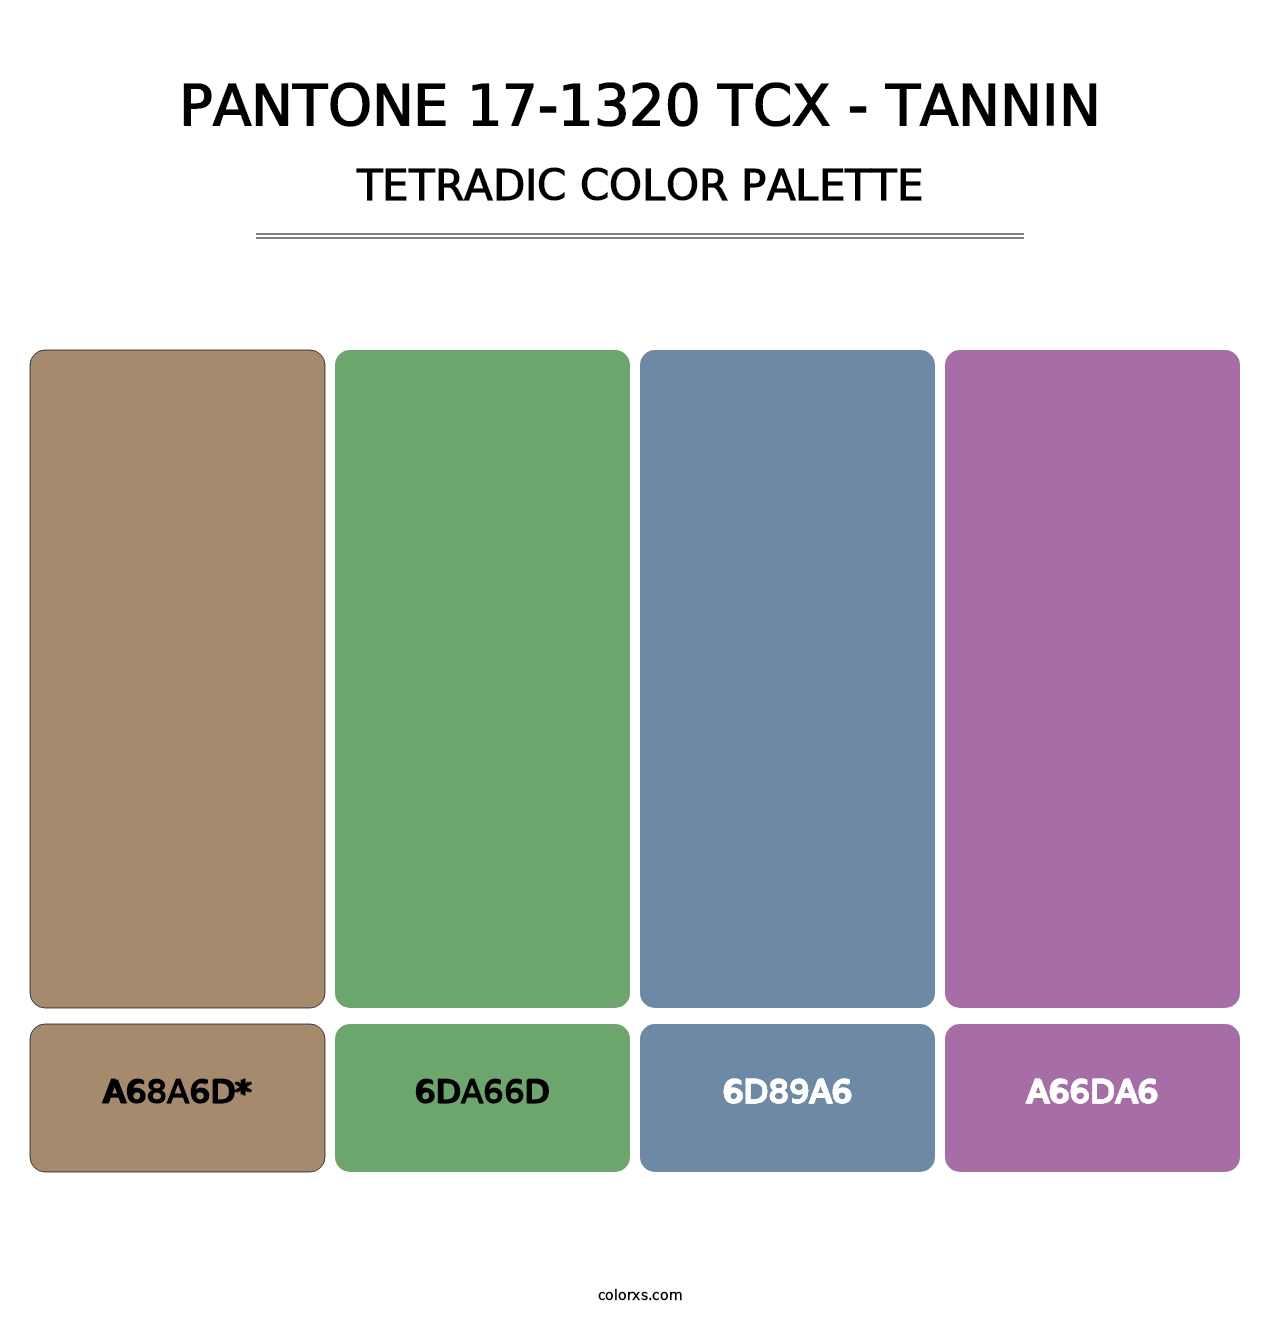 PANTONE 17-1320 TCX - Tannin - Tetradic Color Palette